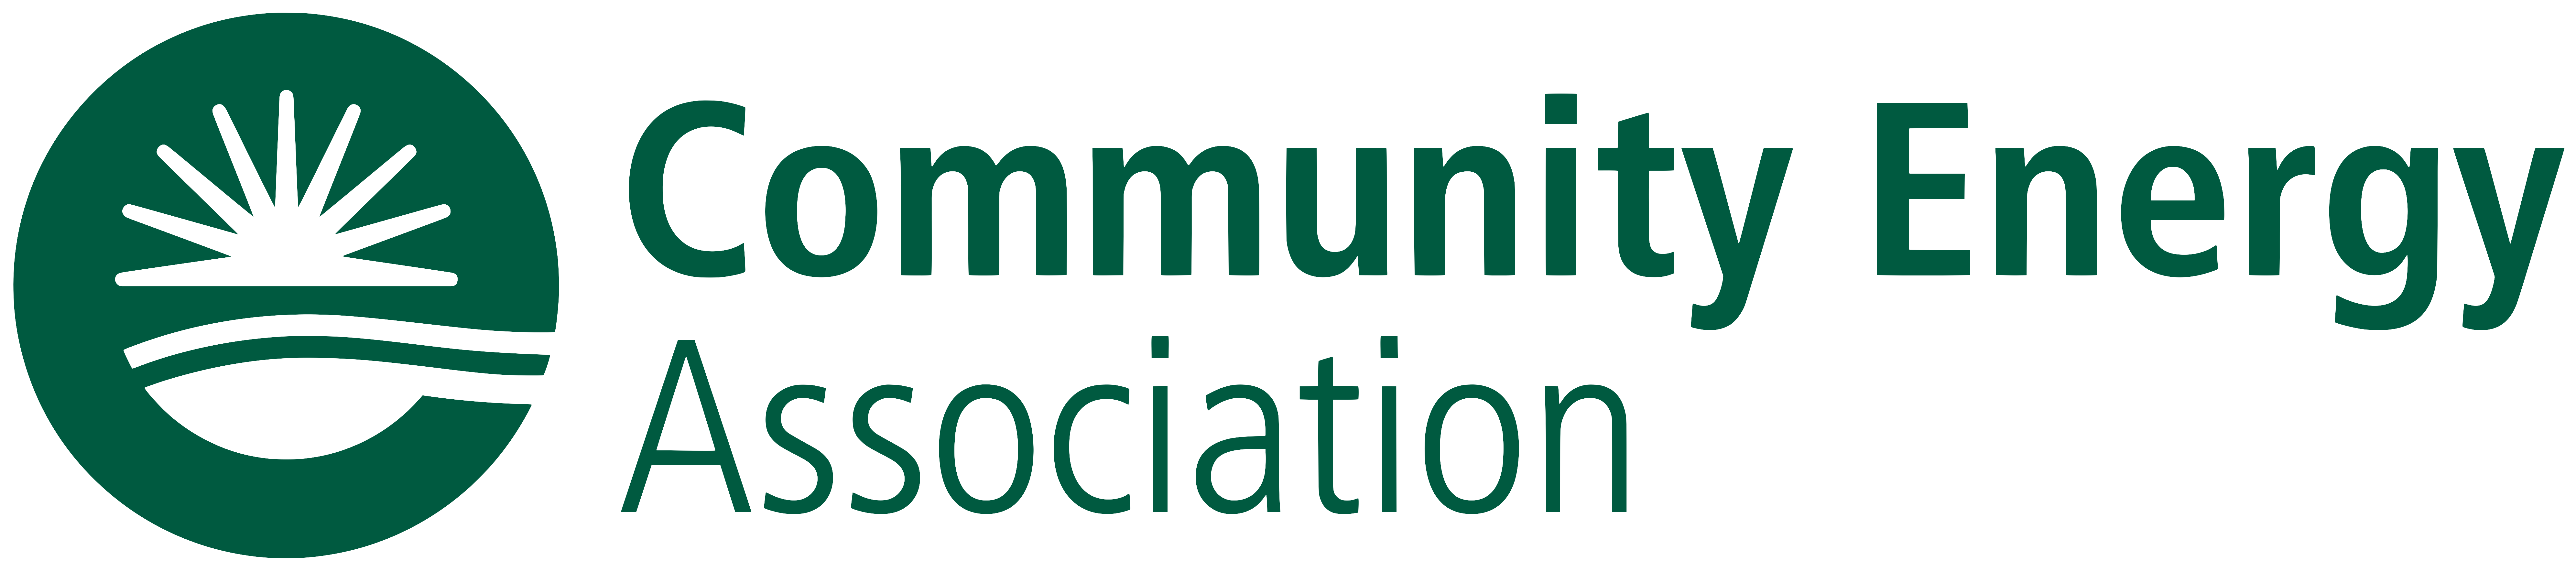 Logo for Community Energy Association on a transparent background